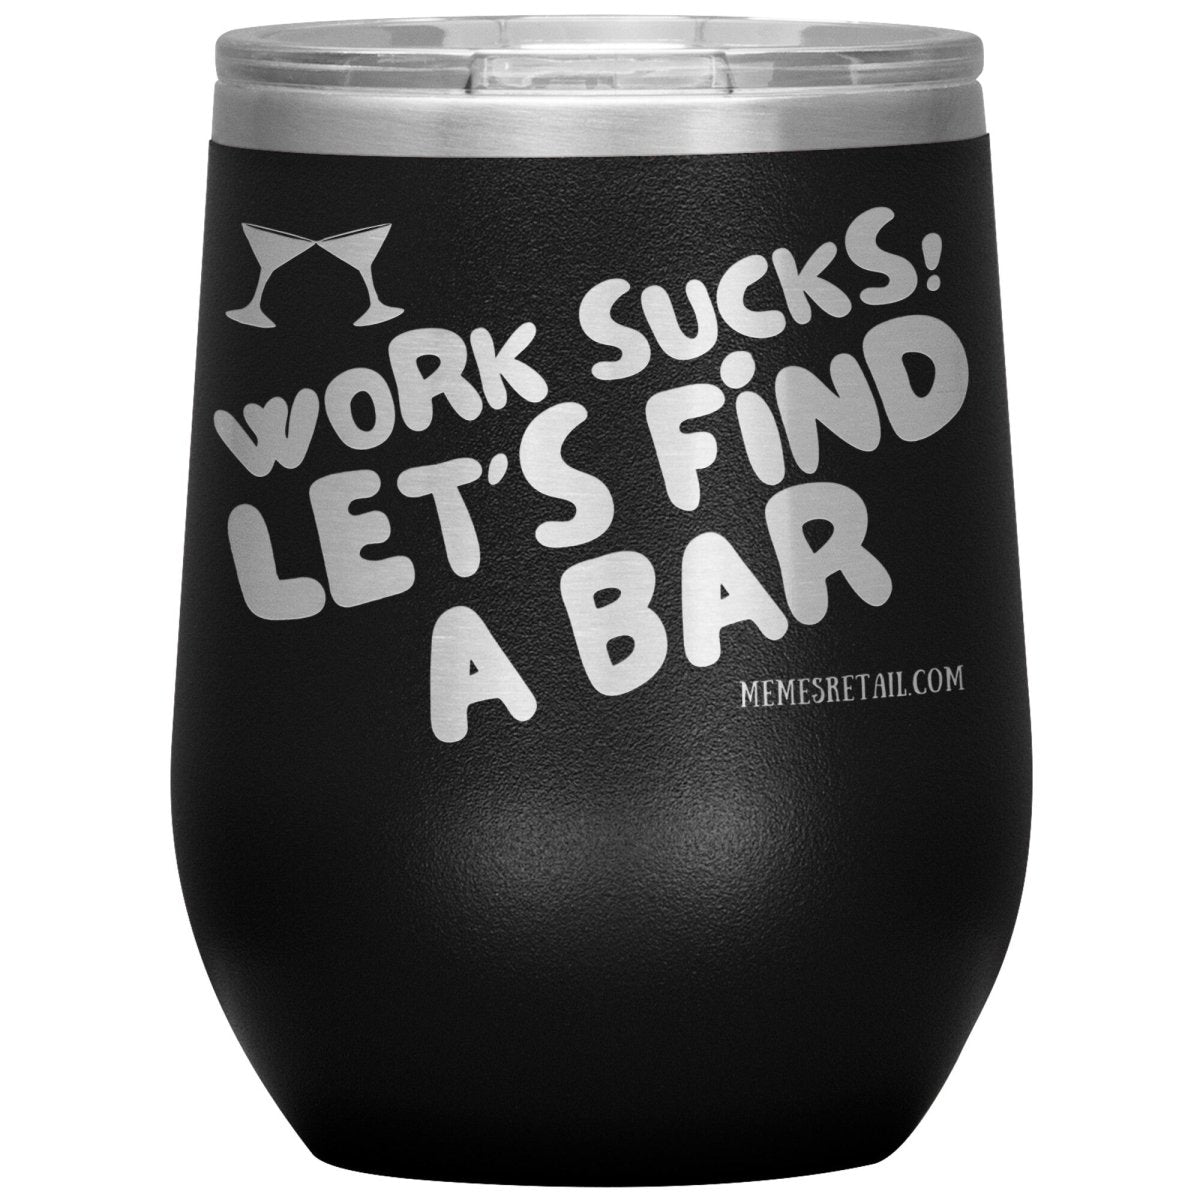 Work Sucks! Let's Find A Bar Tumblers, 12oz Wine Insulated Tumbler / Black - MemesRetail.com